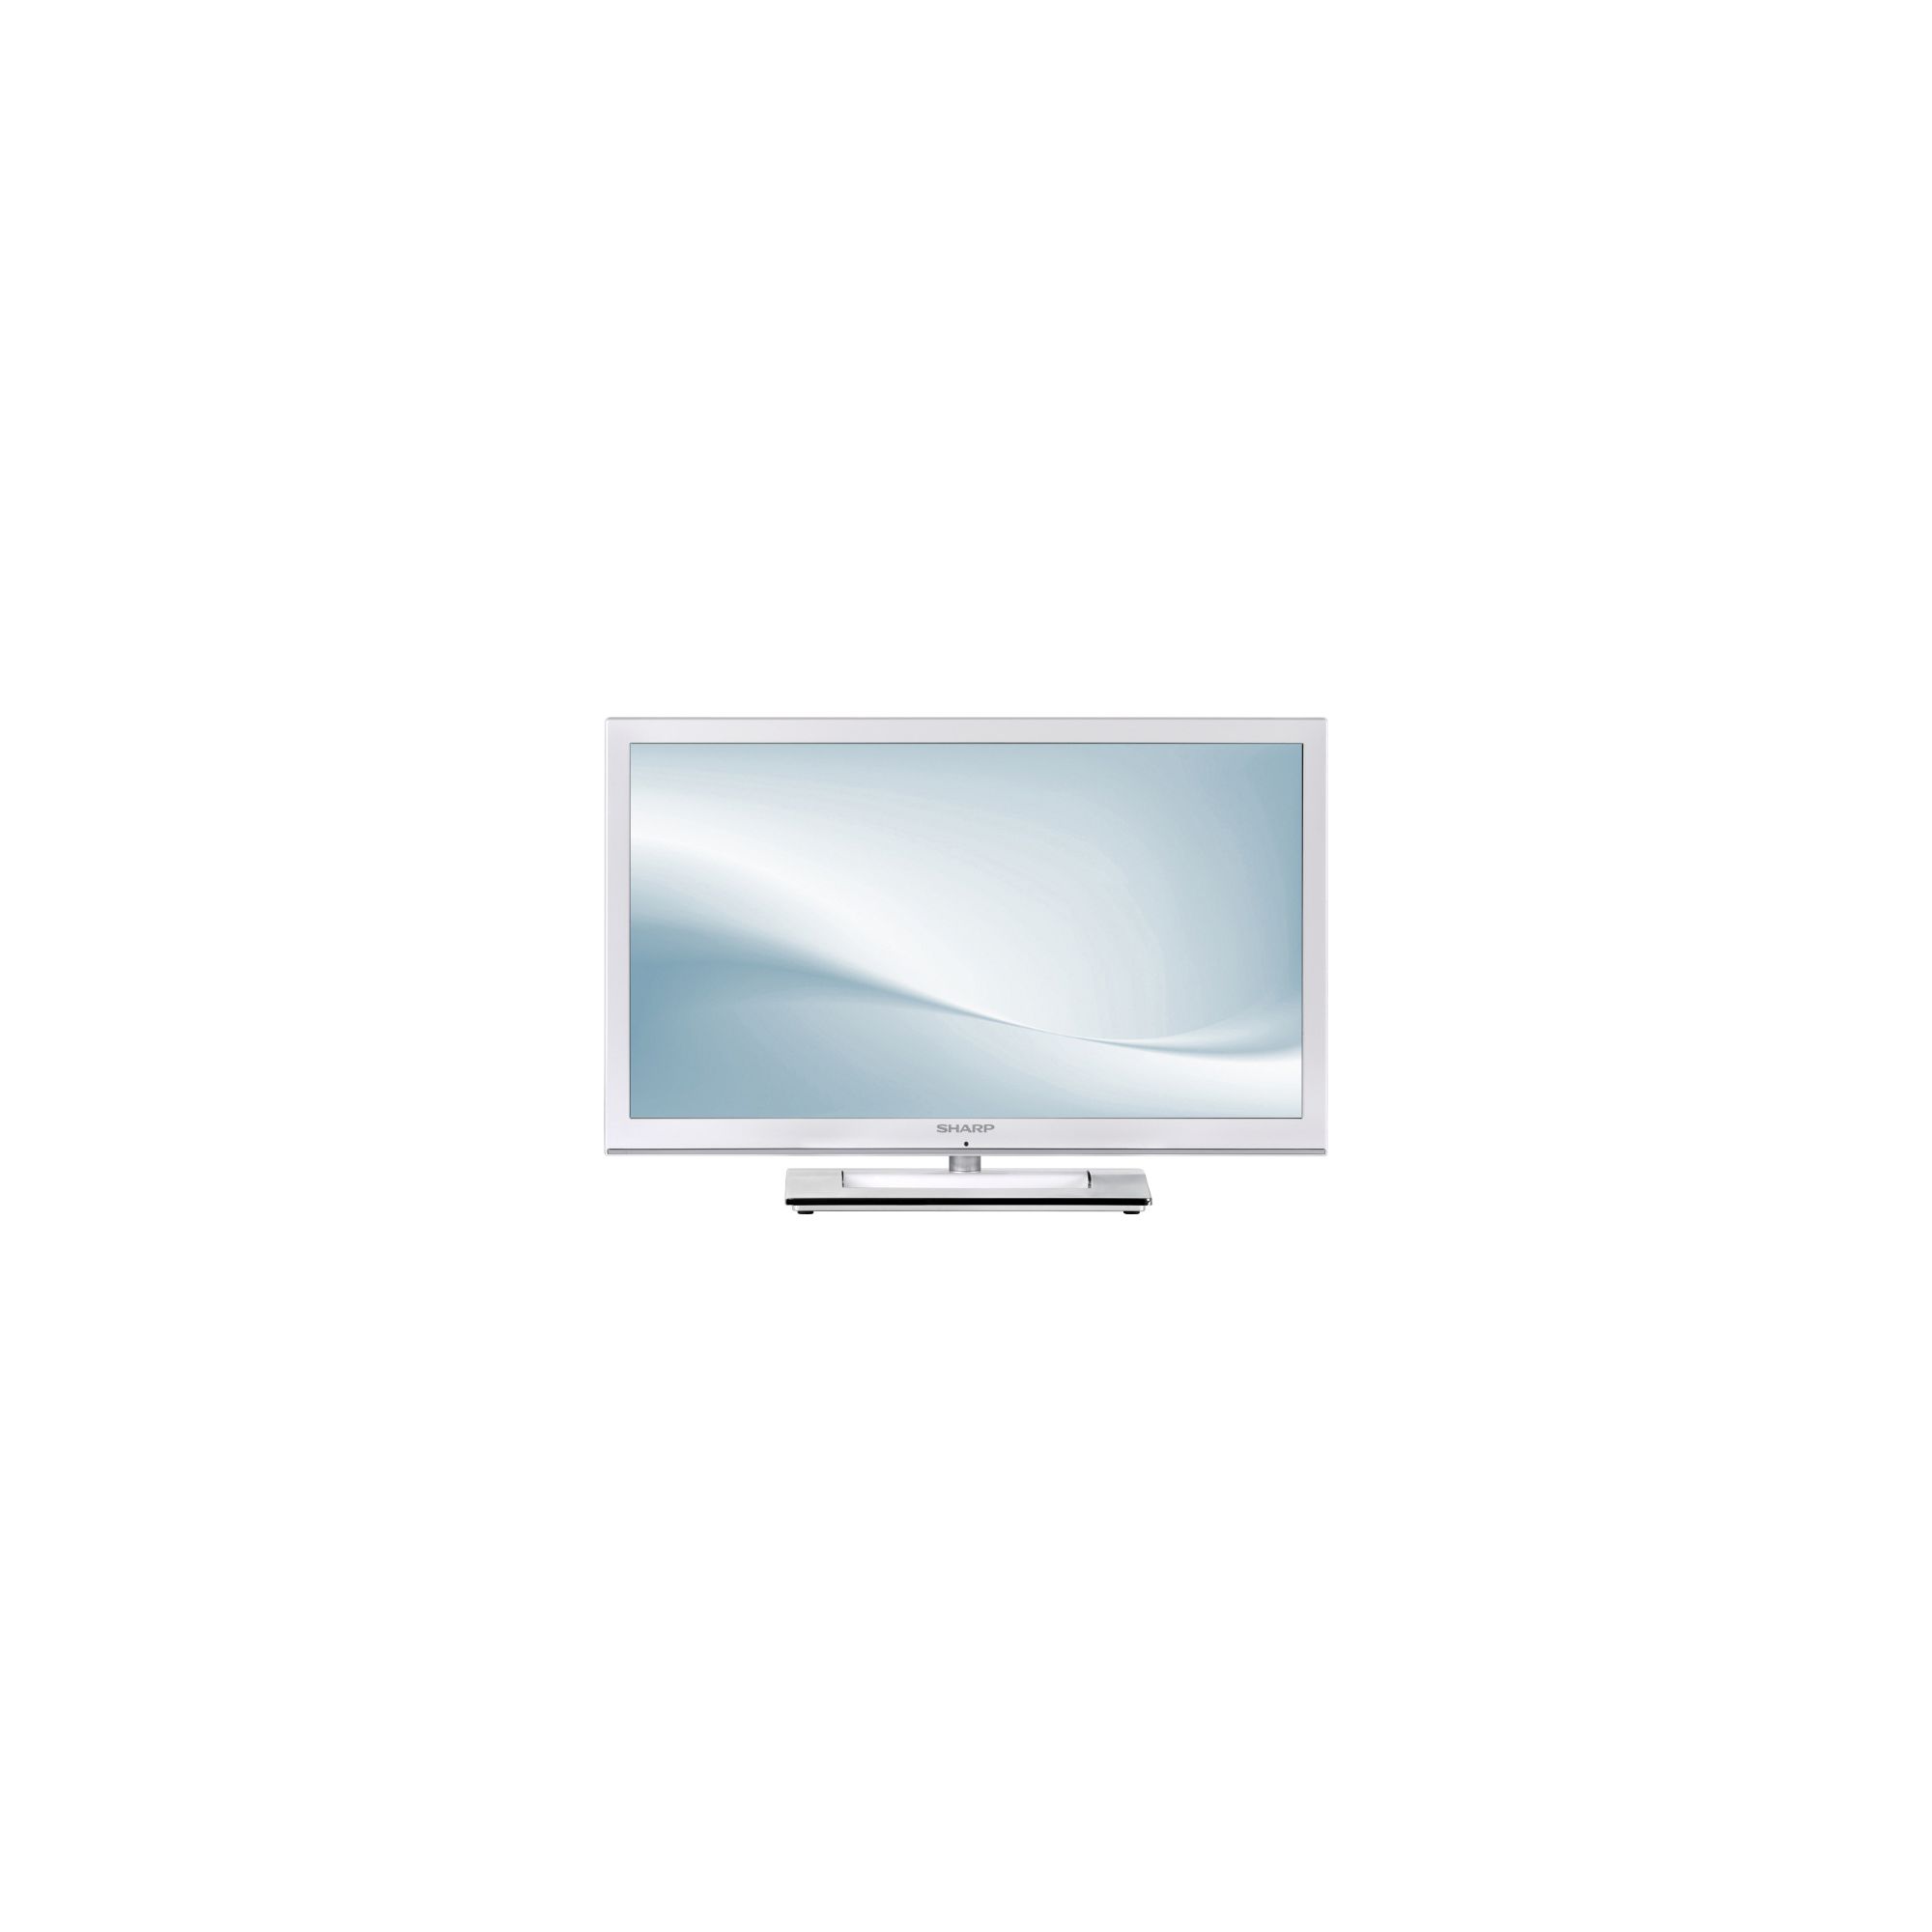 Sharp LE250 24” LCD TV – White